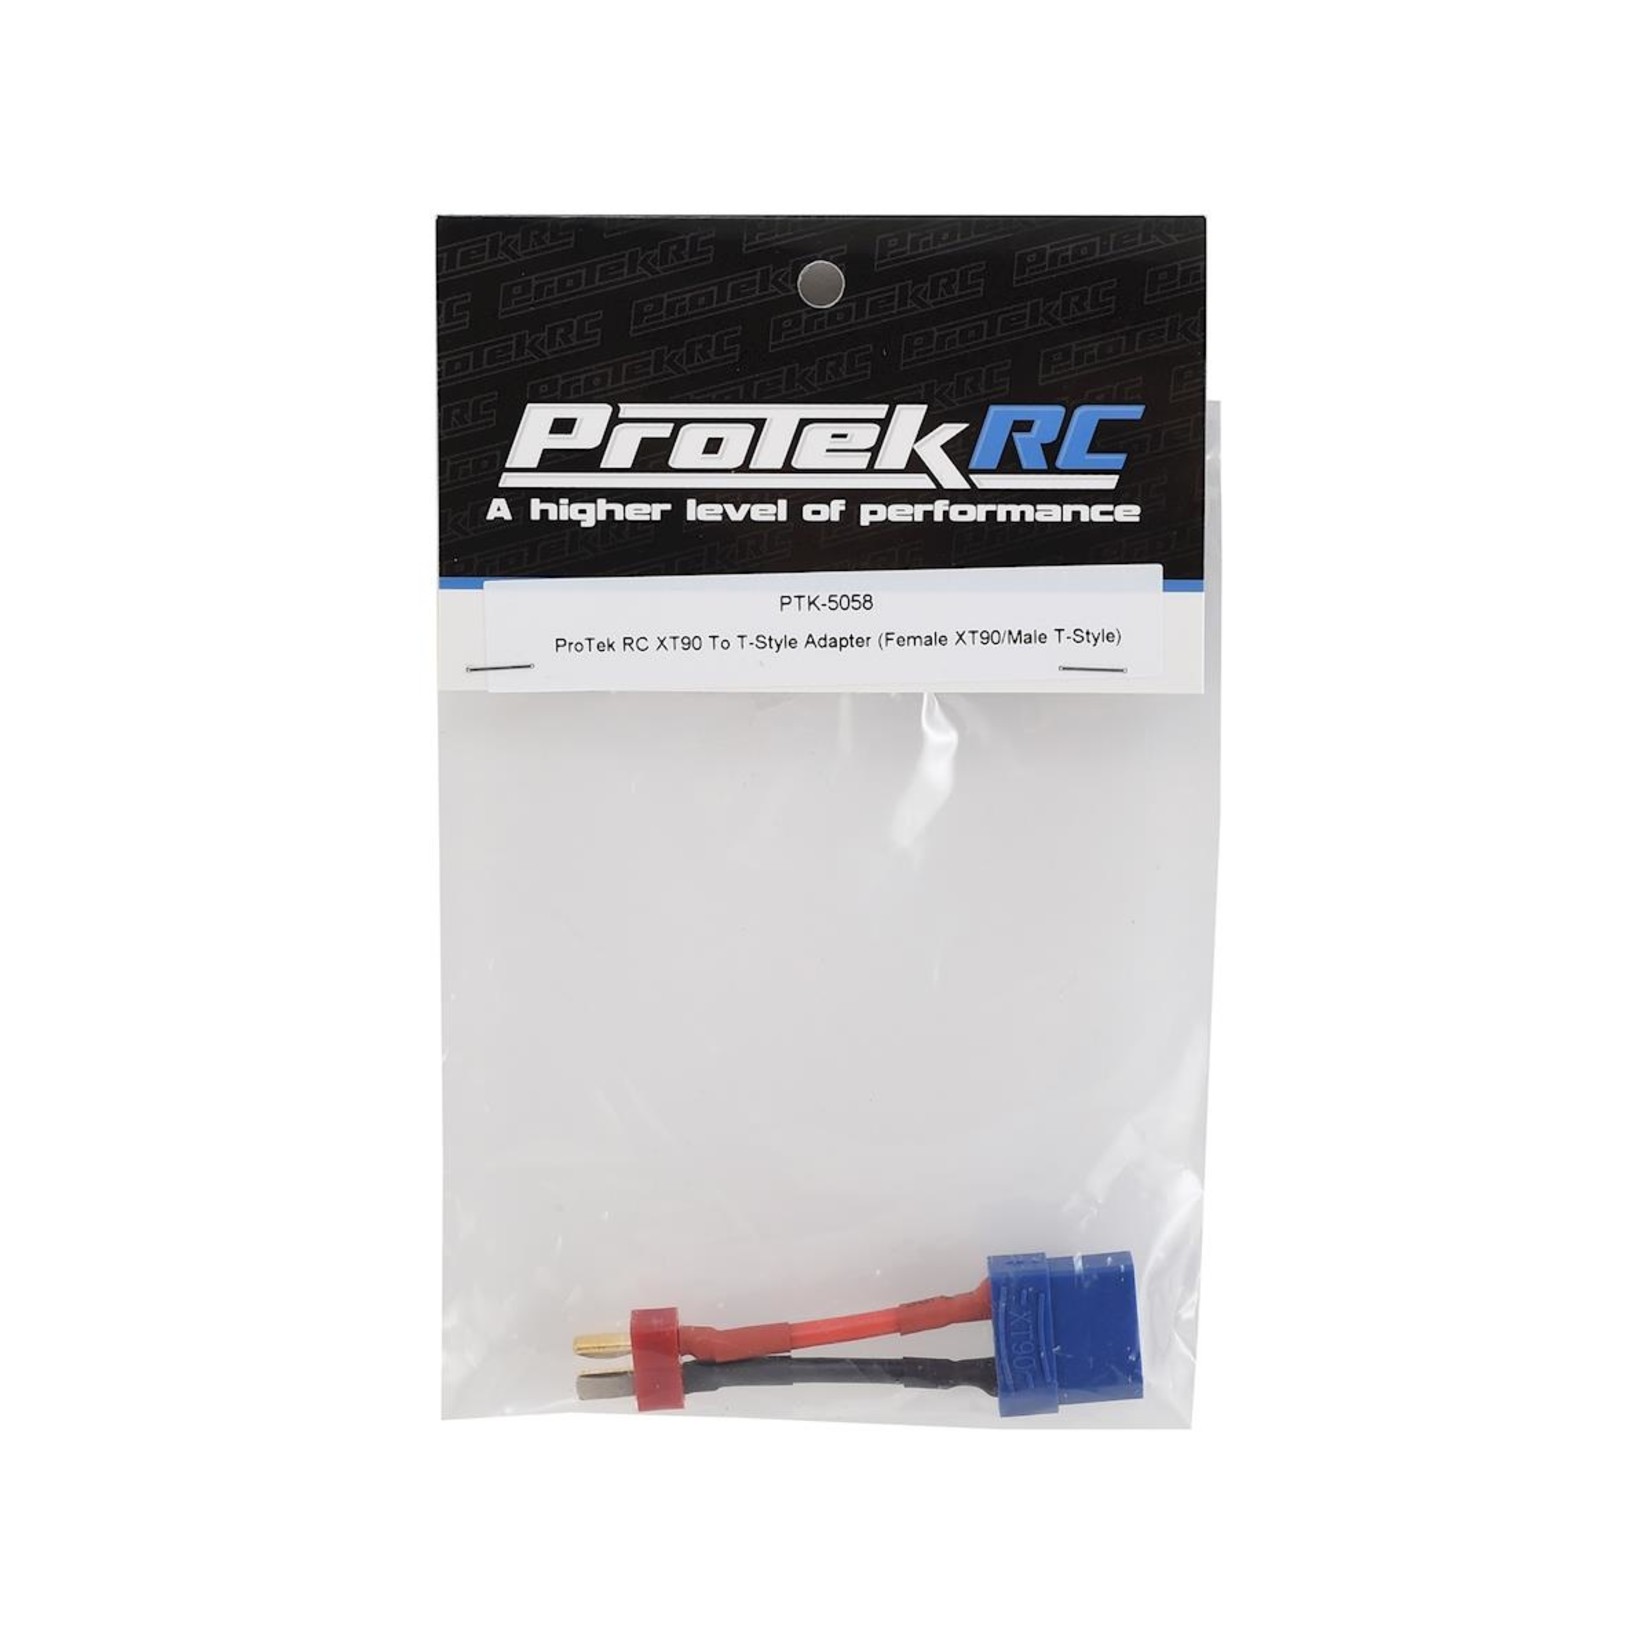 Protek R/C PTK-5058 ProTek RC XT90 to T-Style Adapter (Female XT90/Male T-Style)